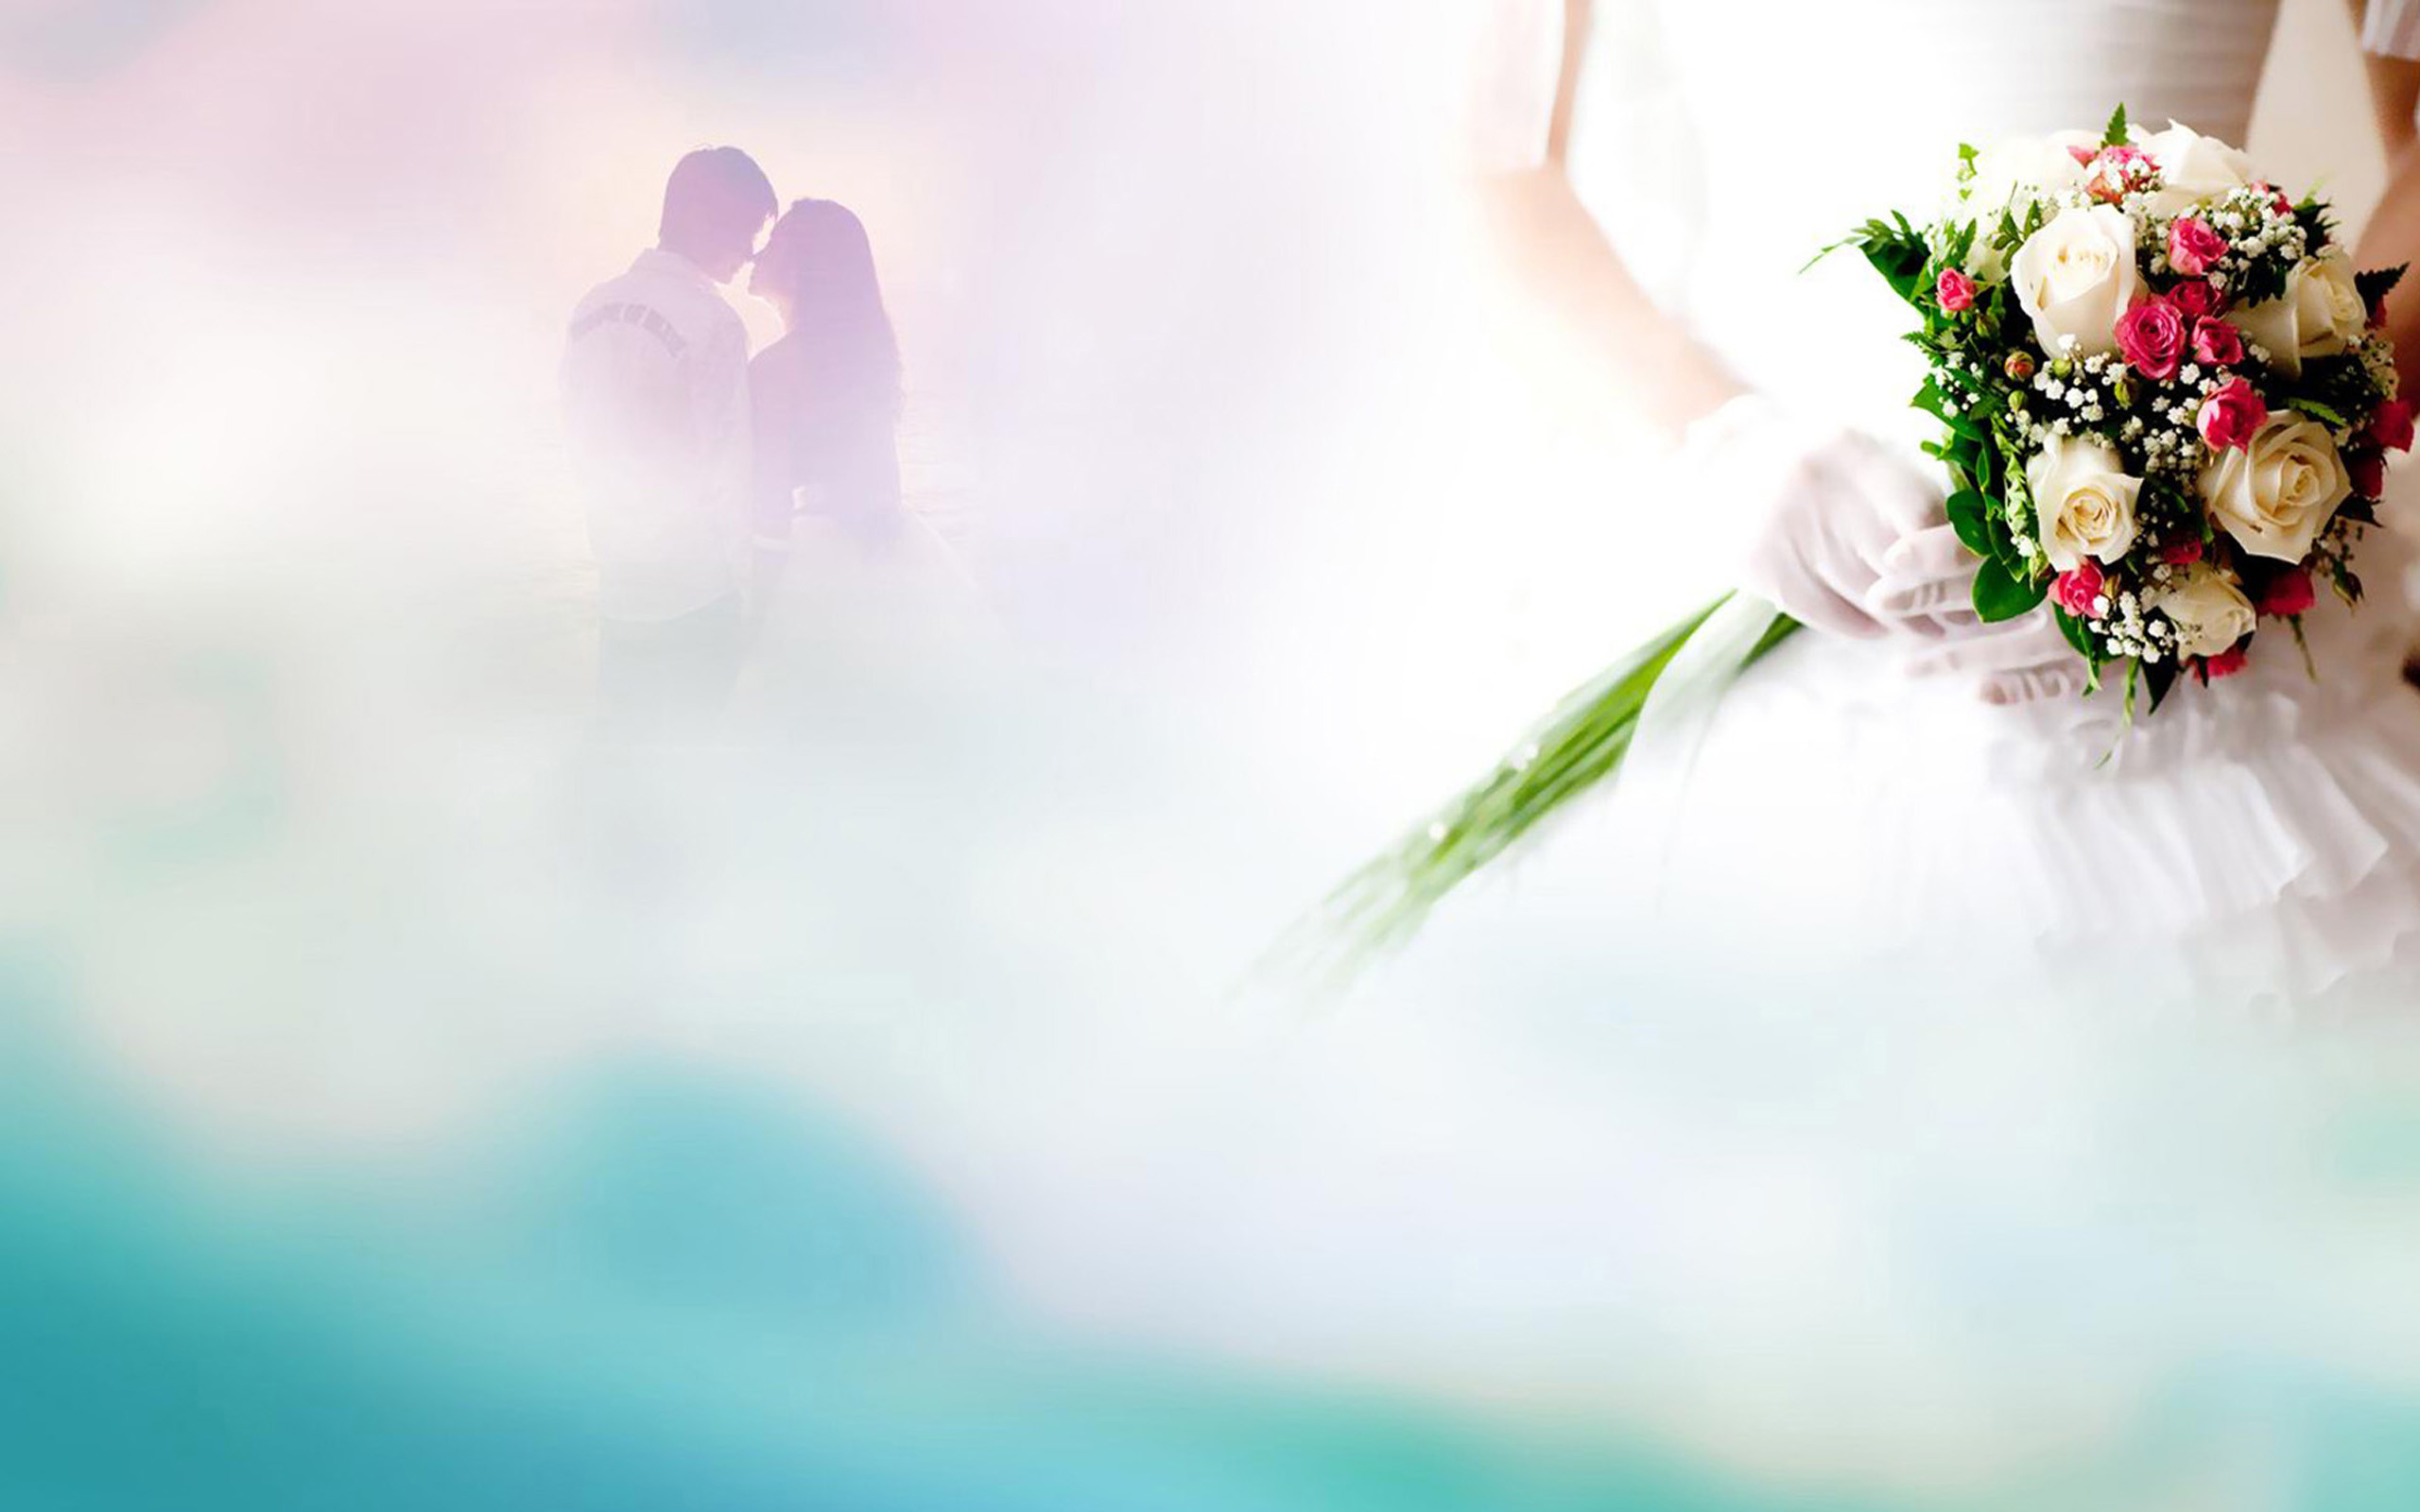 download background wedding photoshop